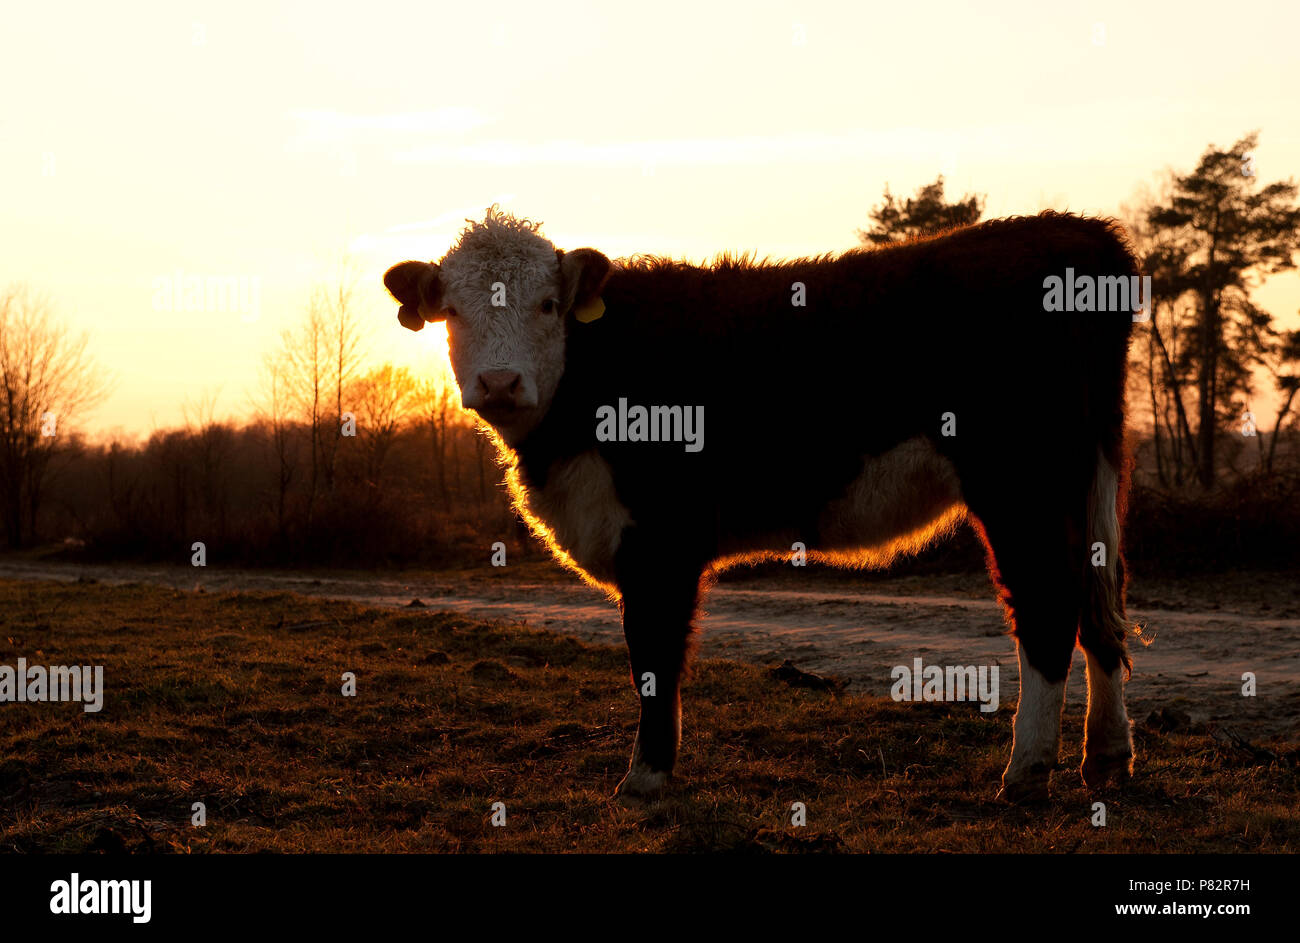 Herreforder rund; Herreford cow Stock Photo